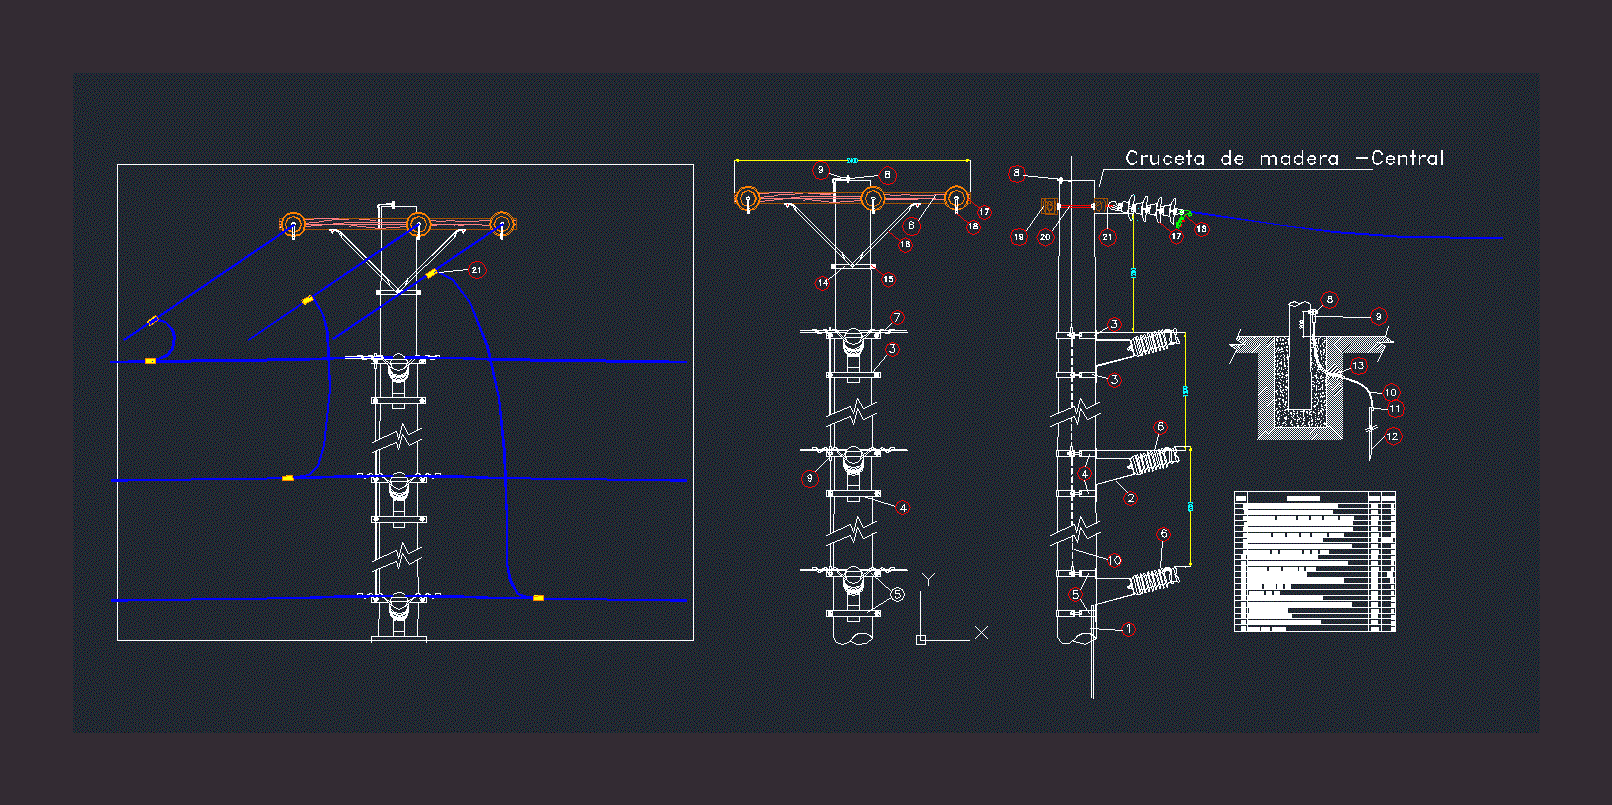 Connection detail in medium voltage lines